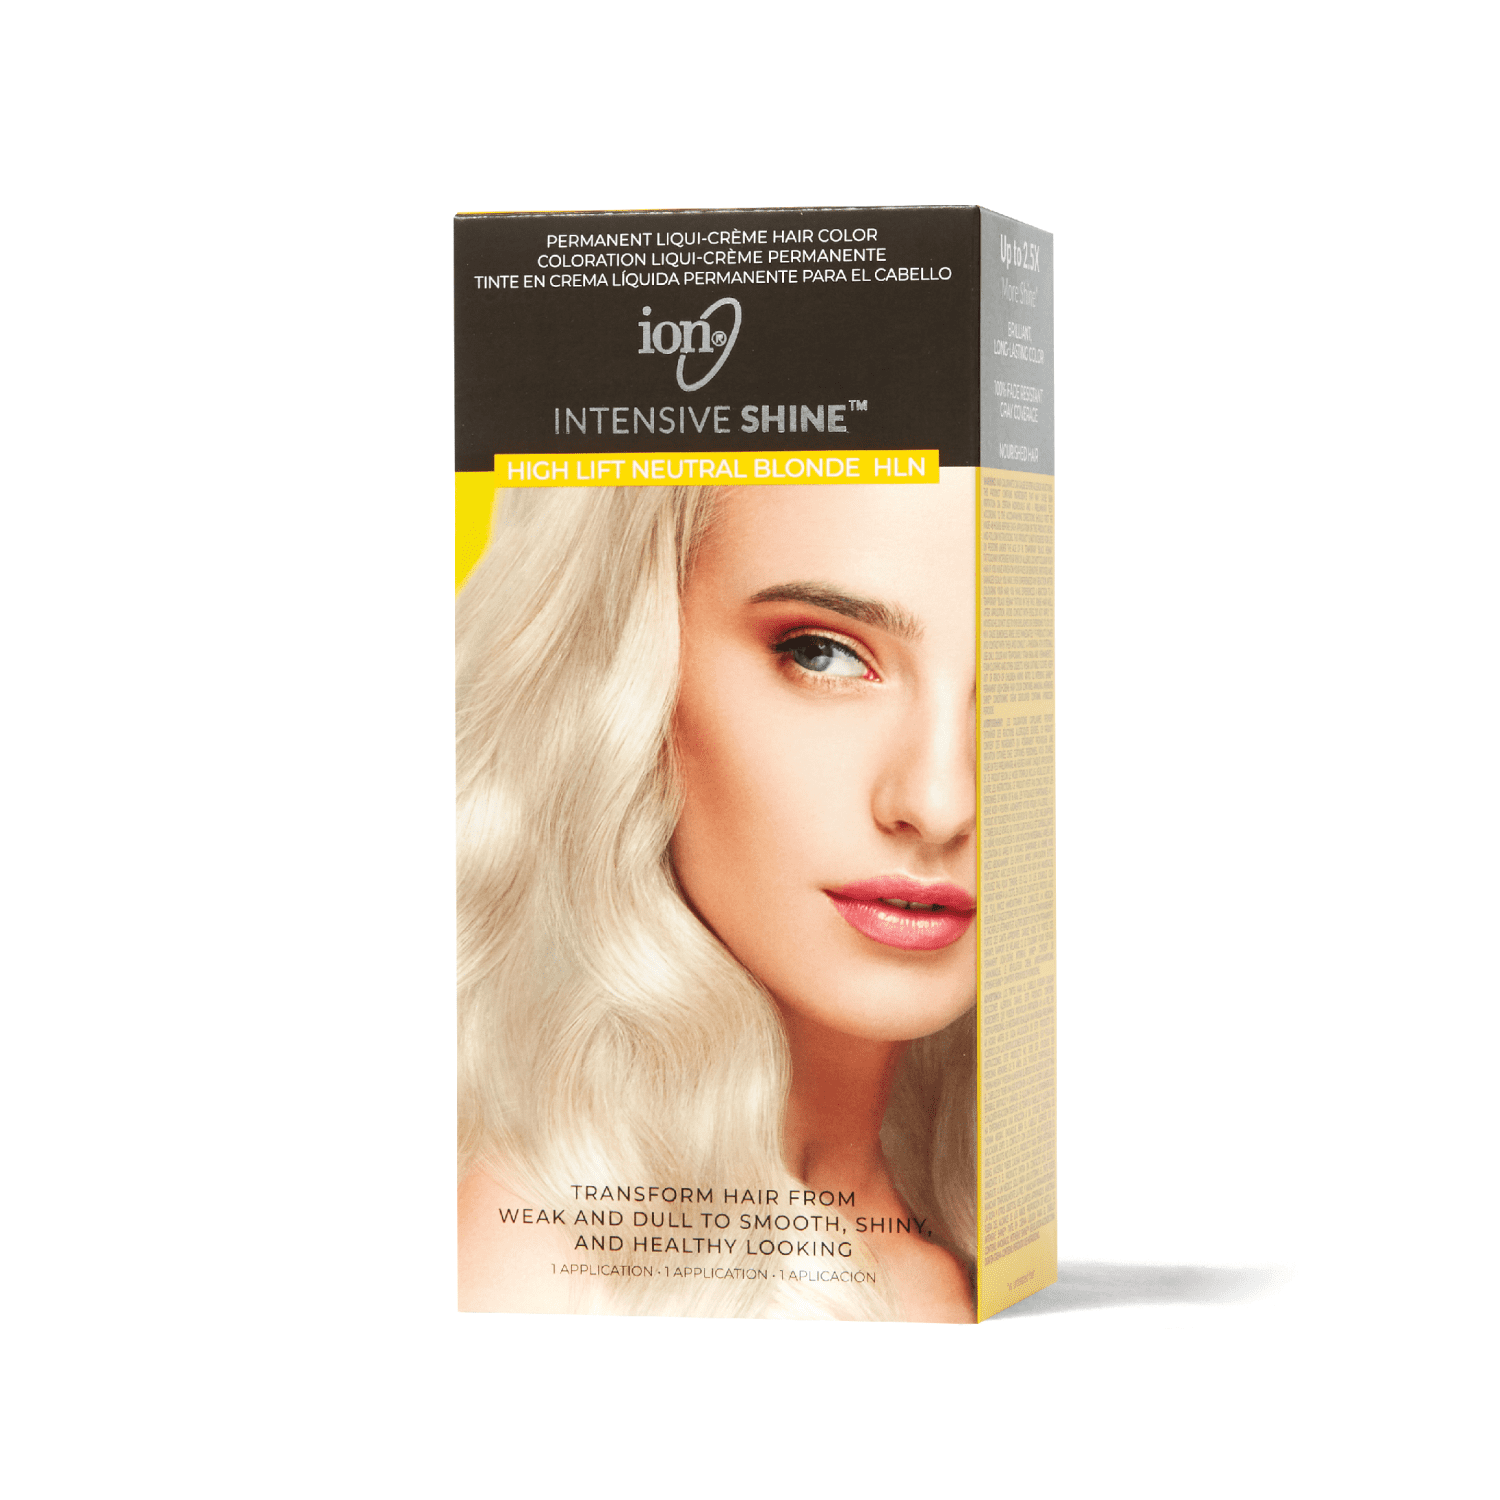 Ion HL-B Hi Lift Ash Blonde Permanent Creme Hair Color HL-B Hi Lift As –  EveryMarket